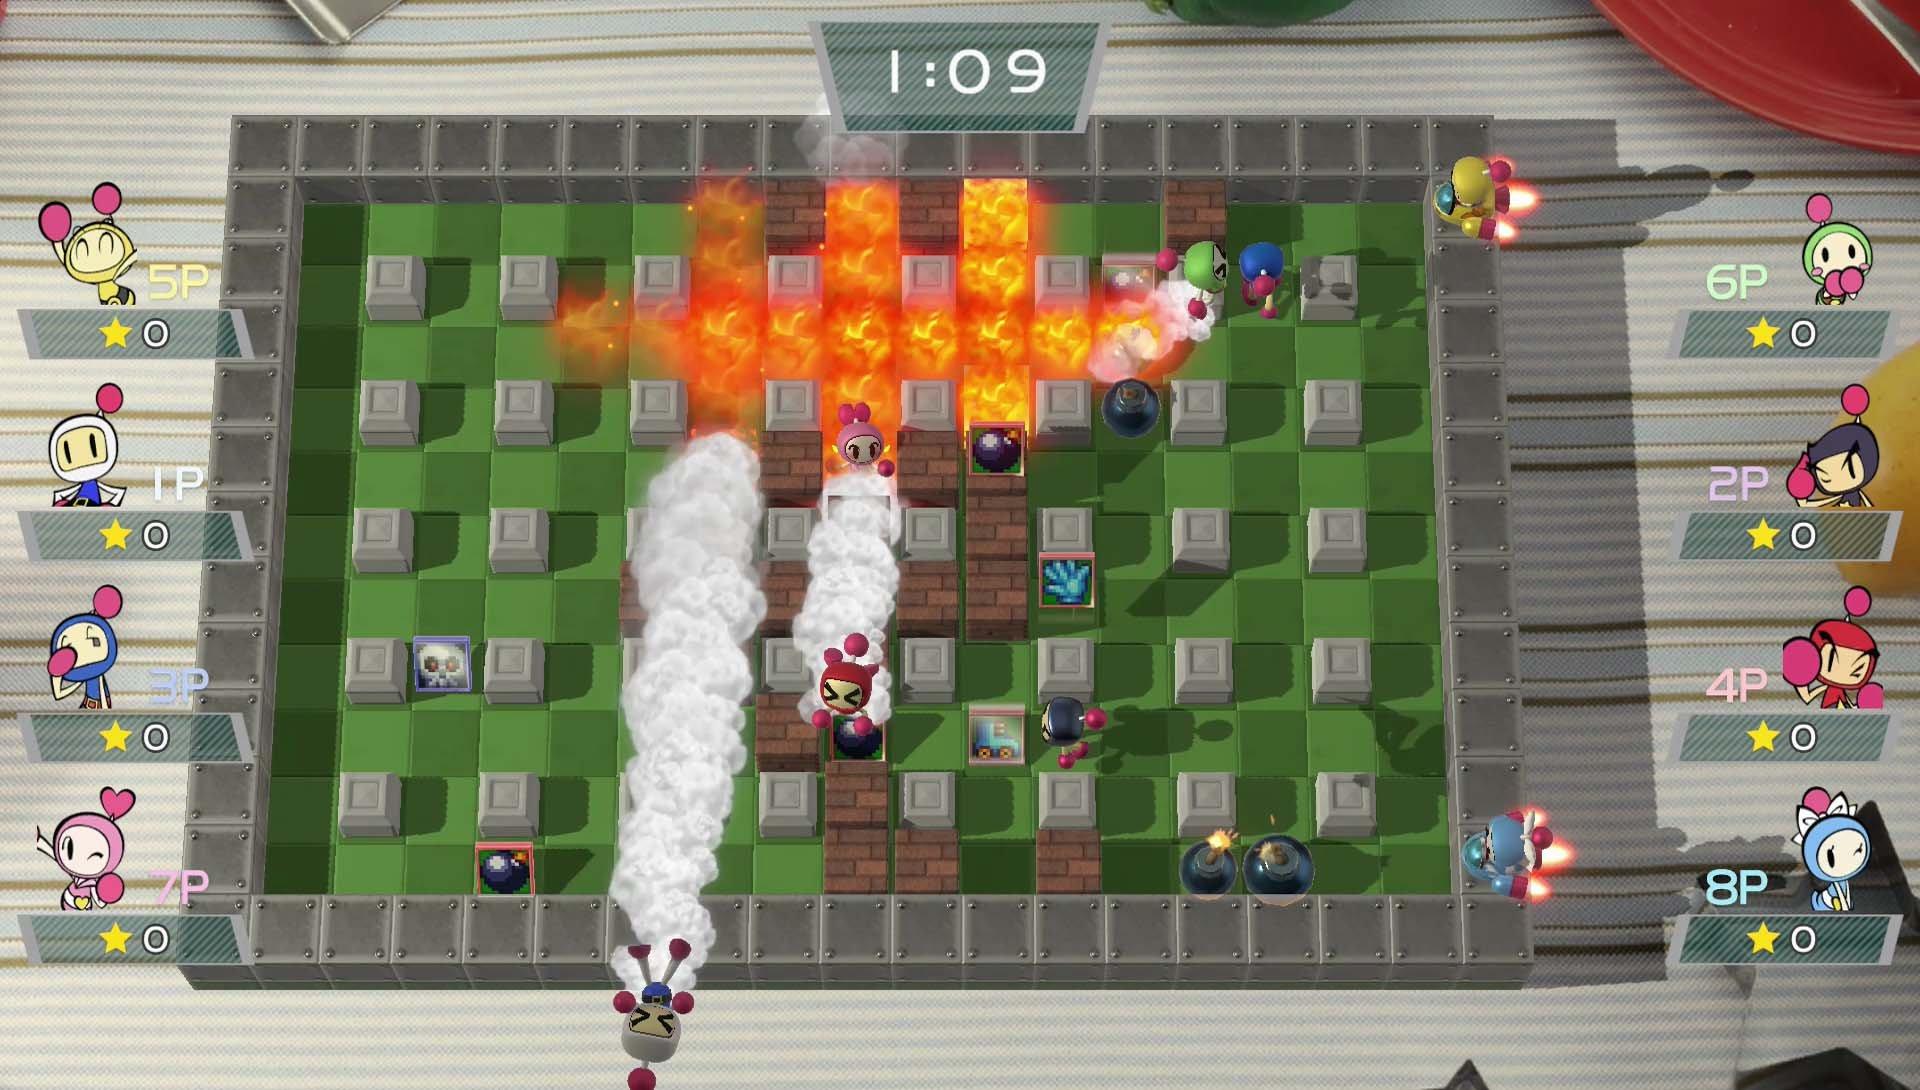 Super Bomberman R2 Review – Xbox Tavern